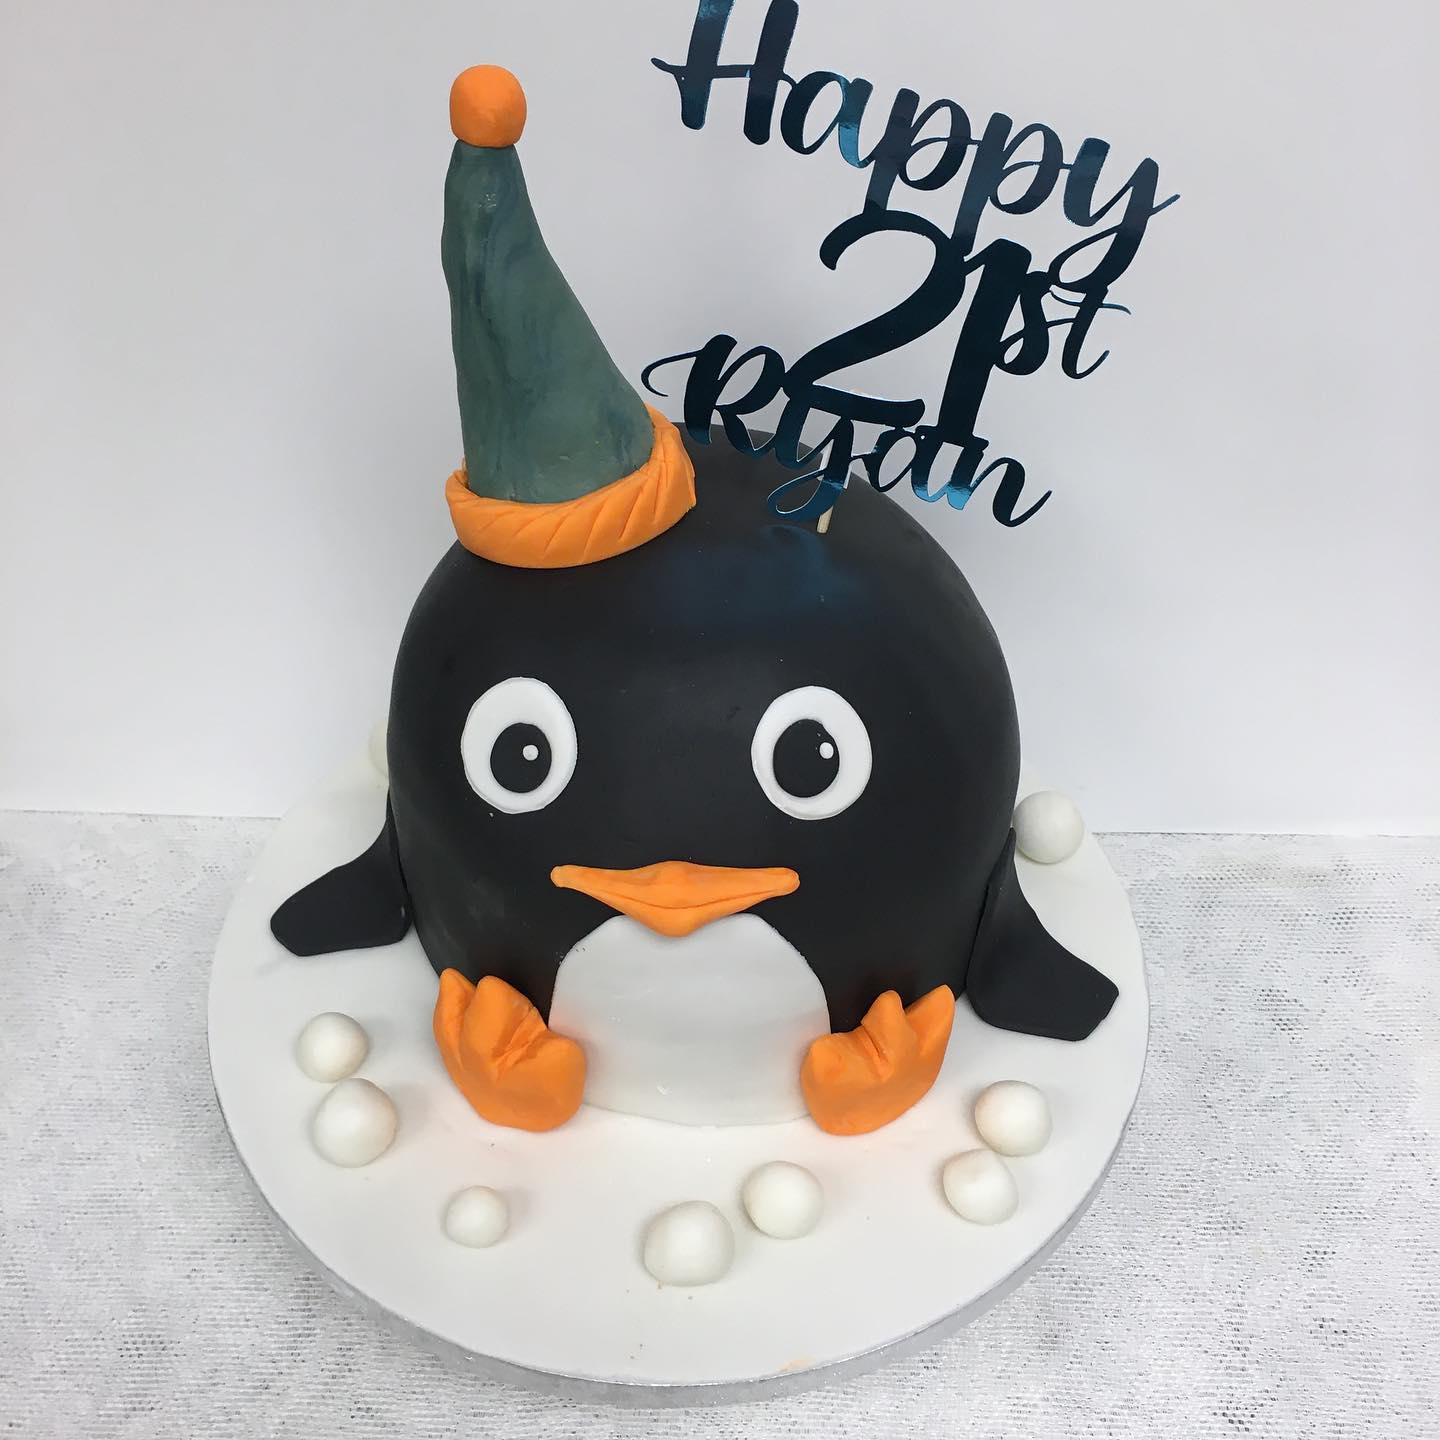 Penguin Shaped Birthday Cake